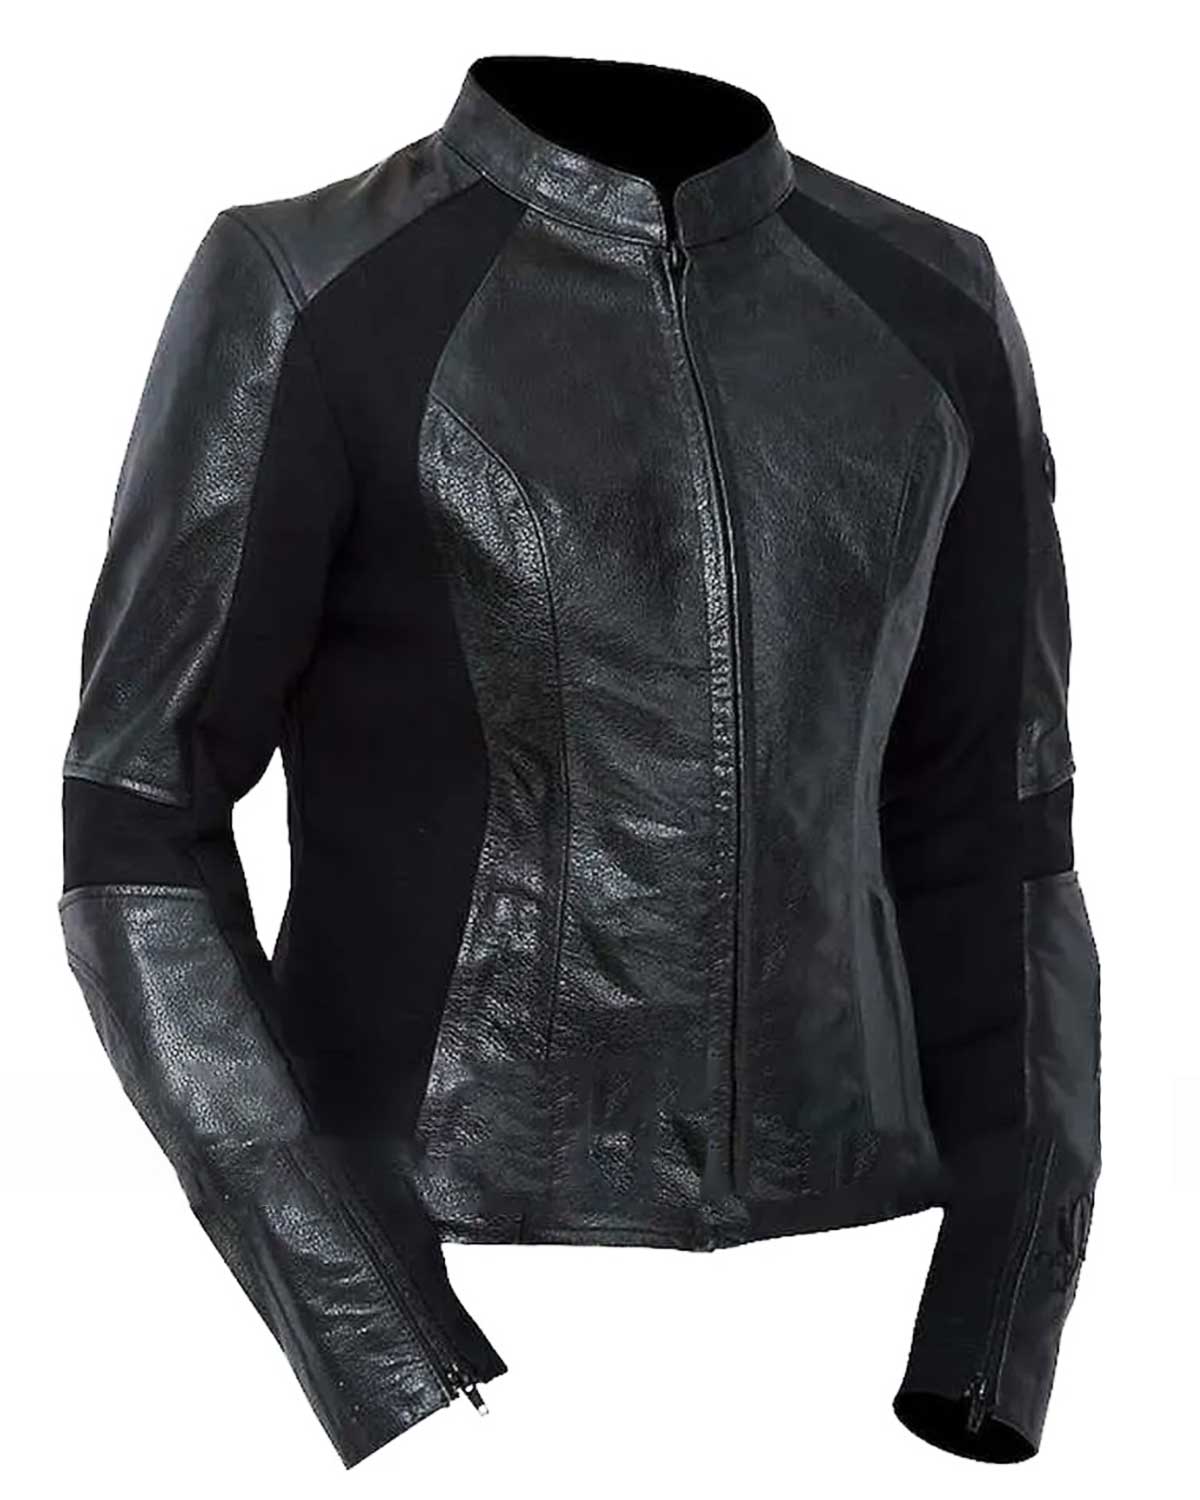 Elite Rebecca Ferguson Mission Impossible 6 Leather Jacket